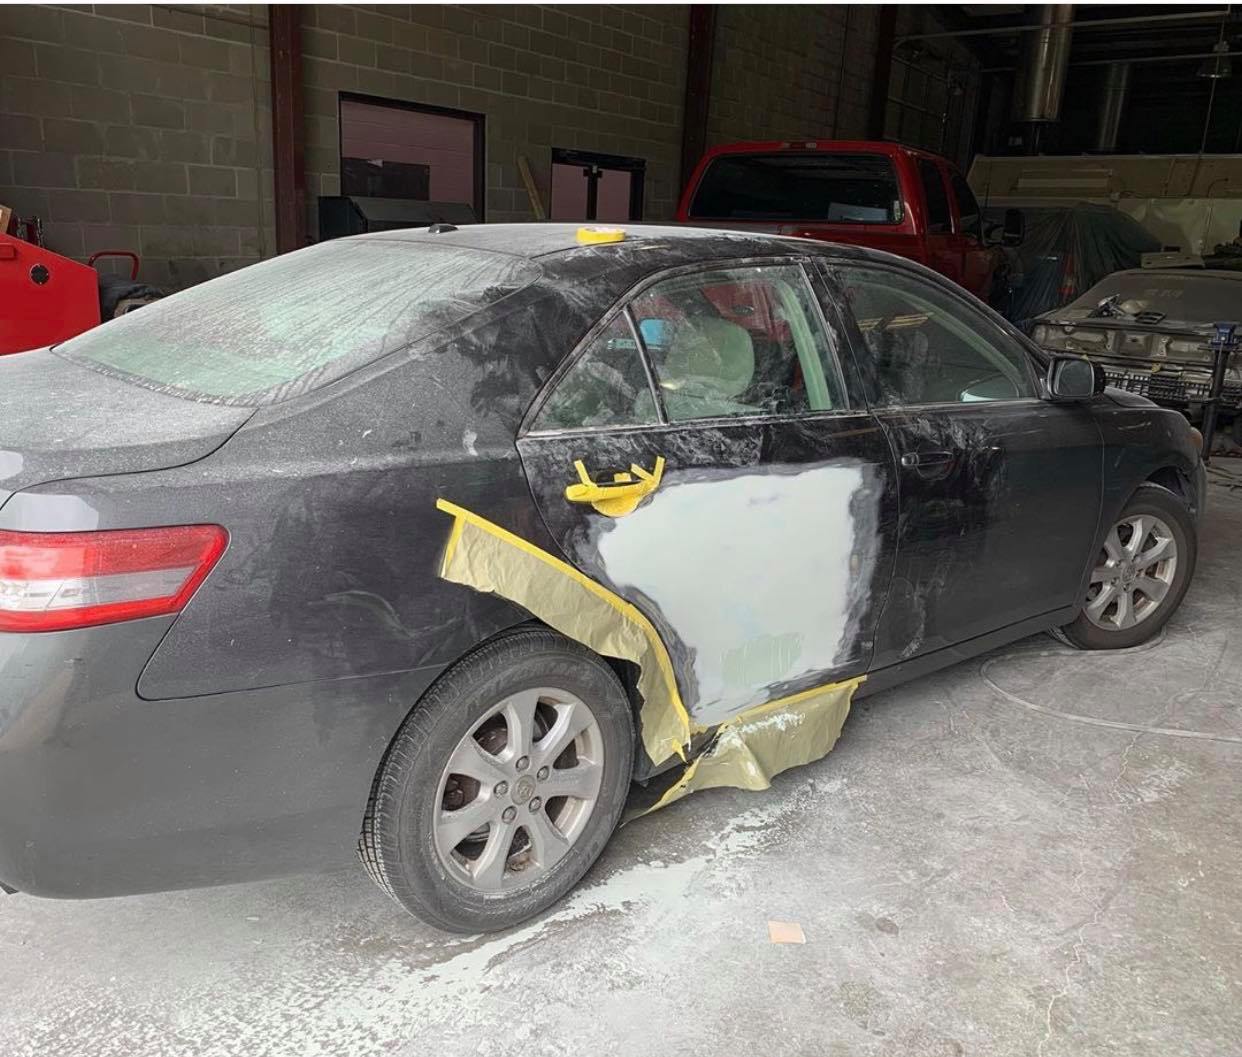 3rd Kind Customz vehicle collision damage 6